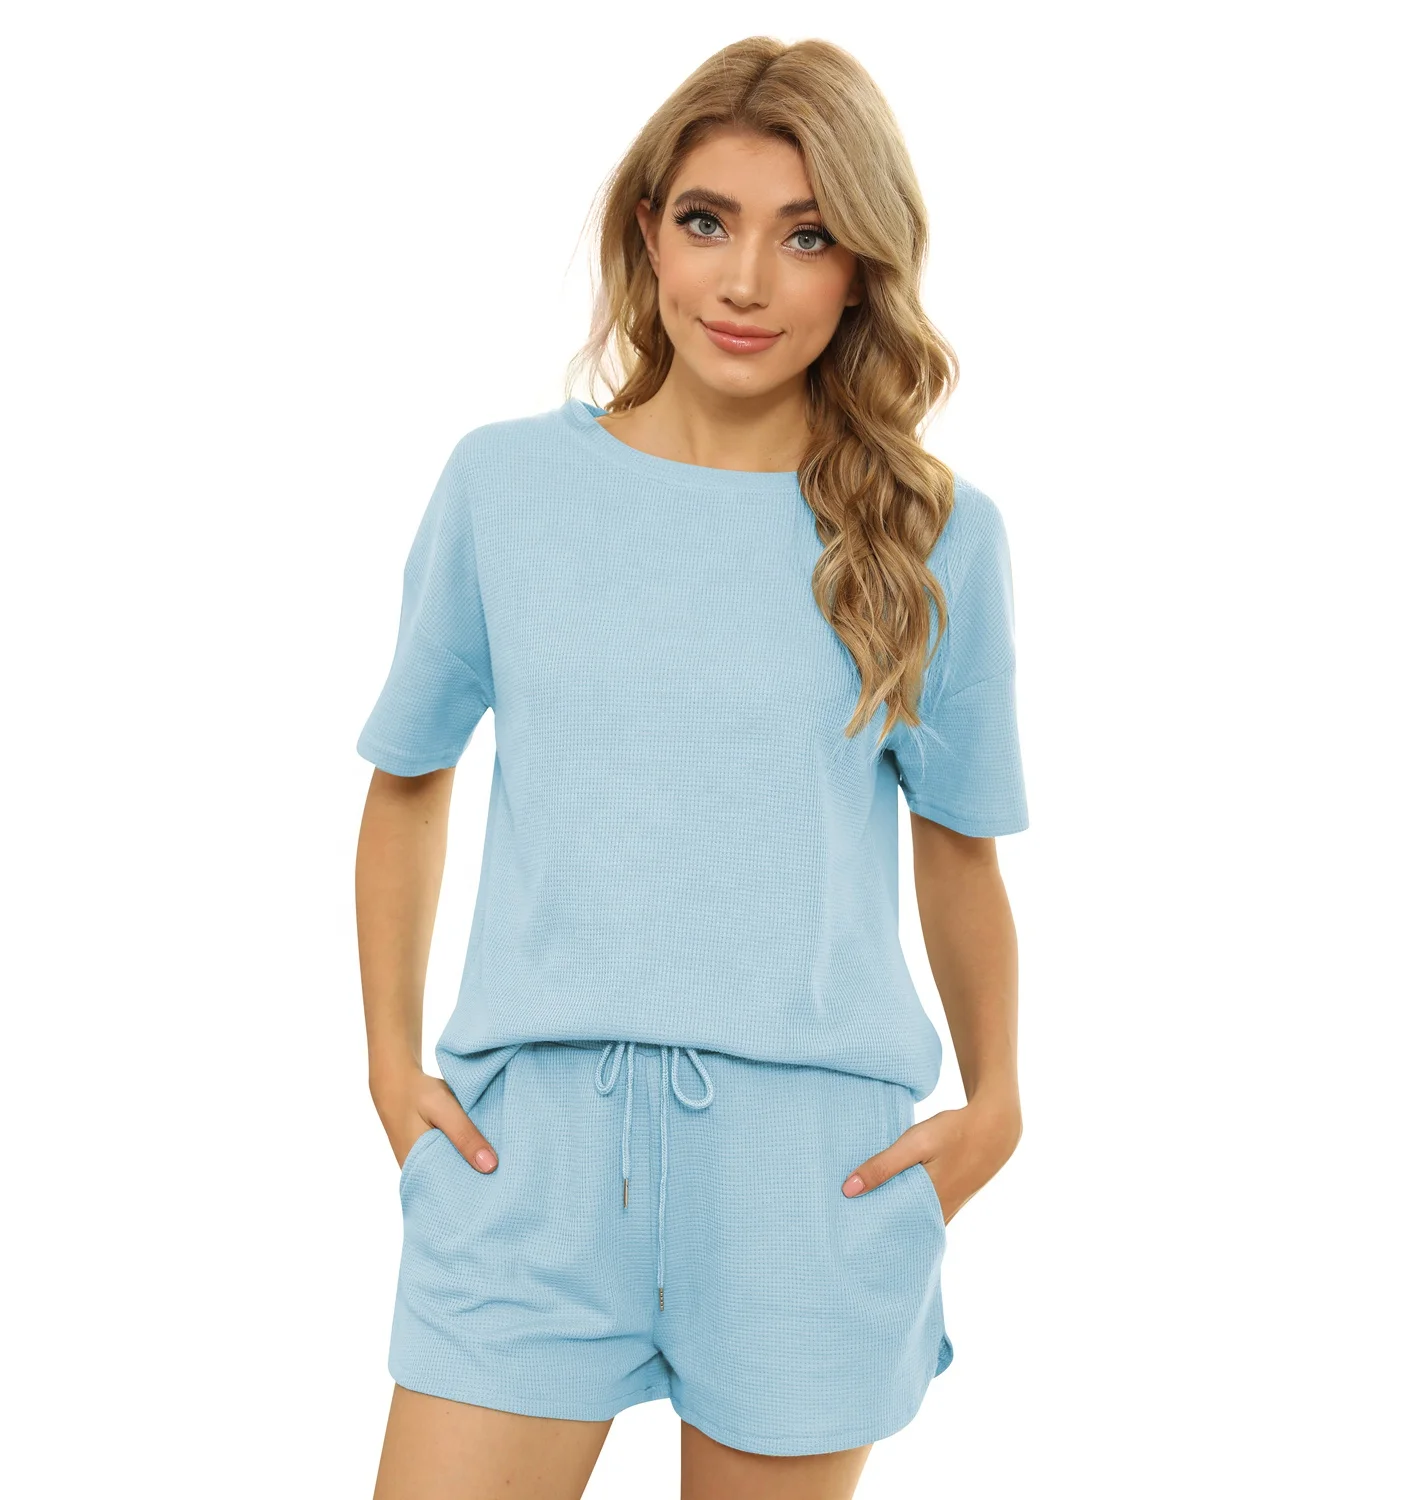 

Women Clothing Women's Short Pajamas Set O-Neck Soft Loungewear Short Sleeved Cotton PJ Set Nightwear Sleepwear for Summer